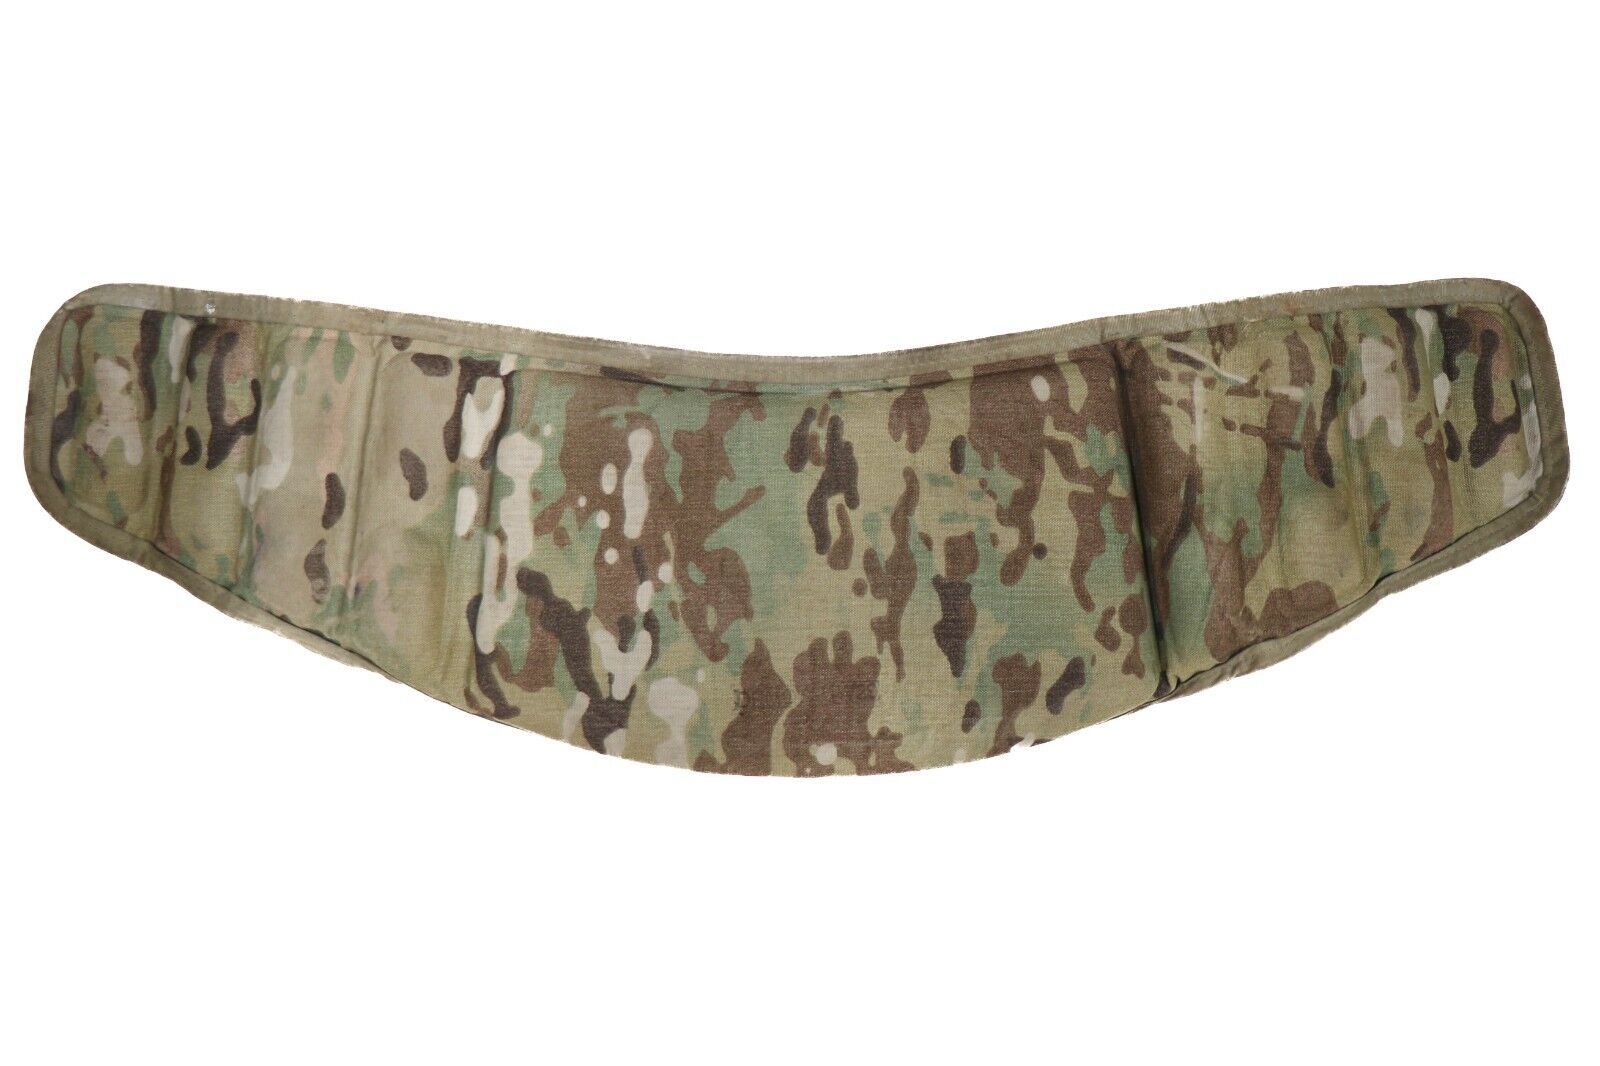 DAMAGED US Army Large Rucksack Waist Belt Hip Belt OCP Multicam Molle Woodland